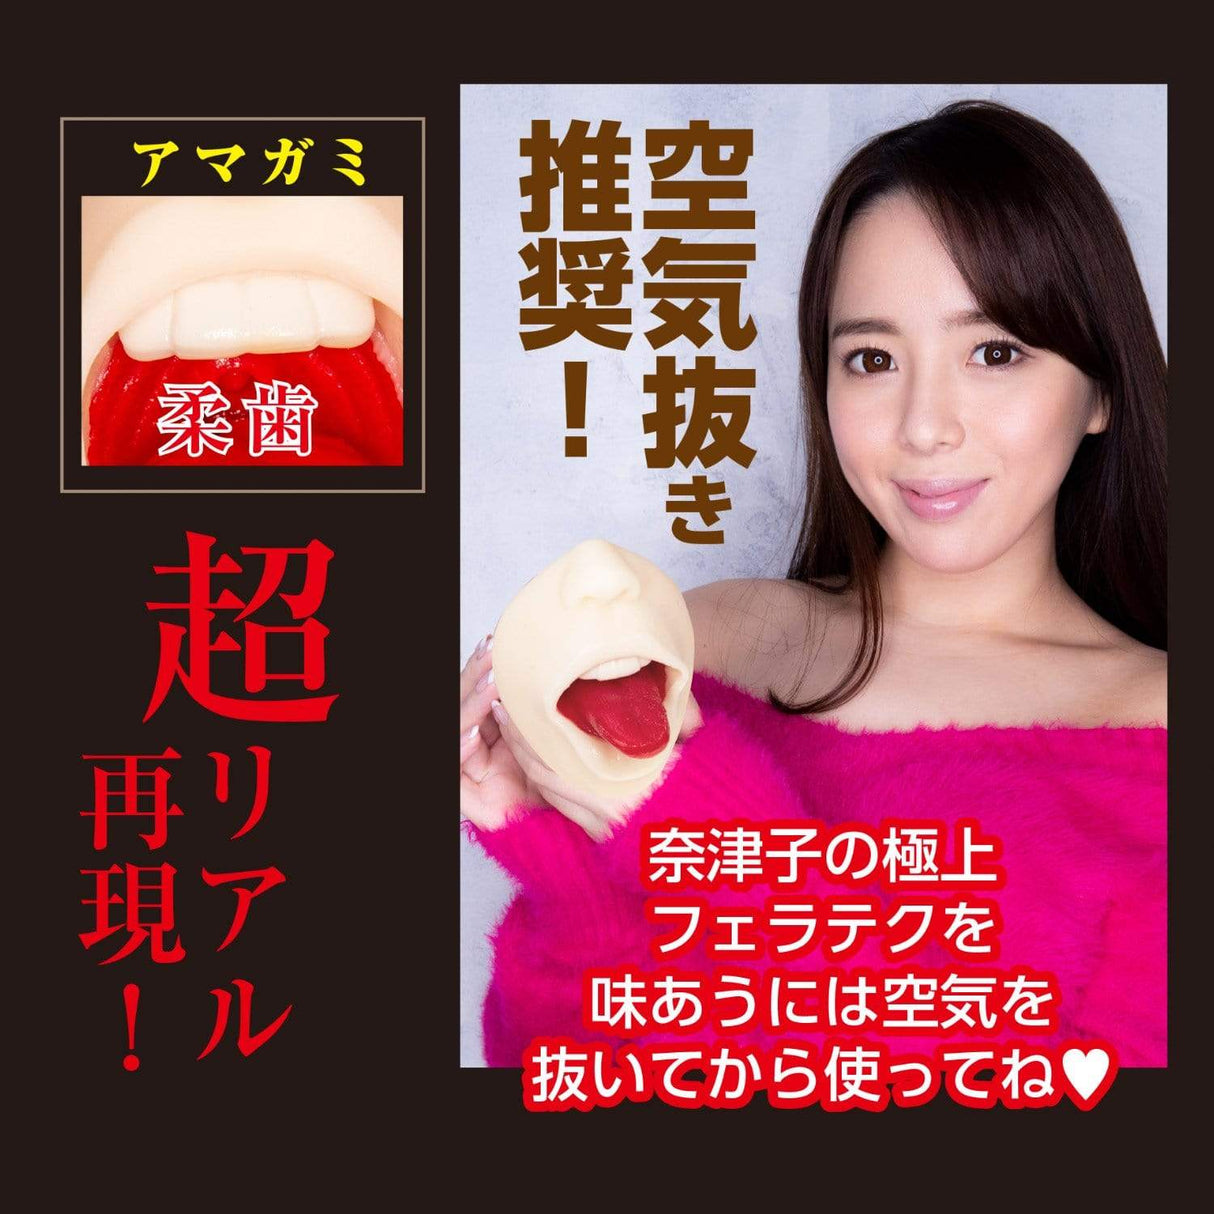 NPG - Super Blow Job Geki Fera Mishima Natsuko Onahole (Beige) NPG1104 CherryAffairs